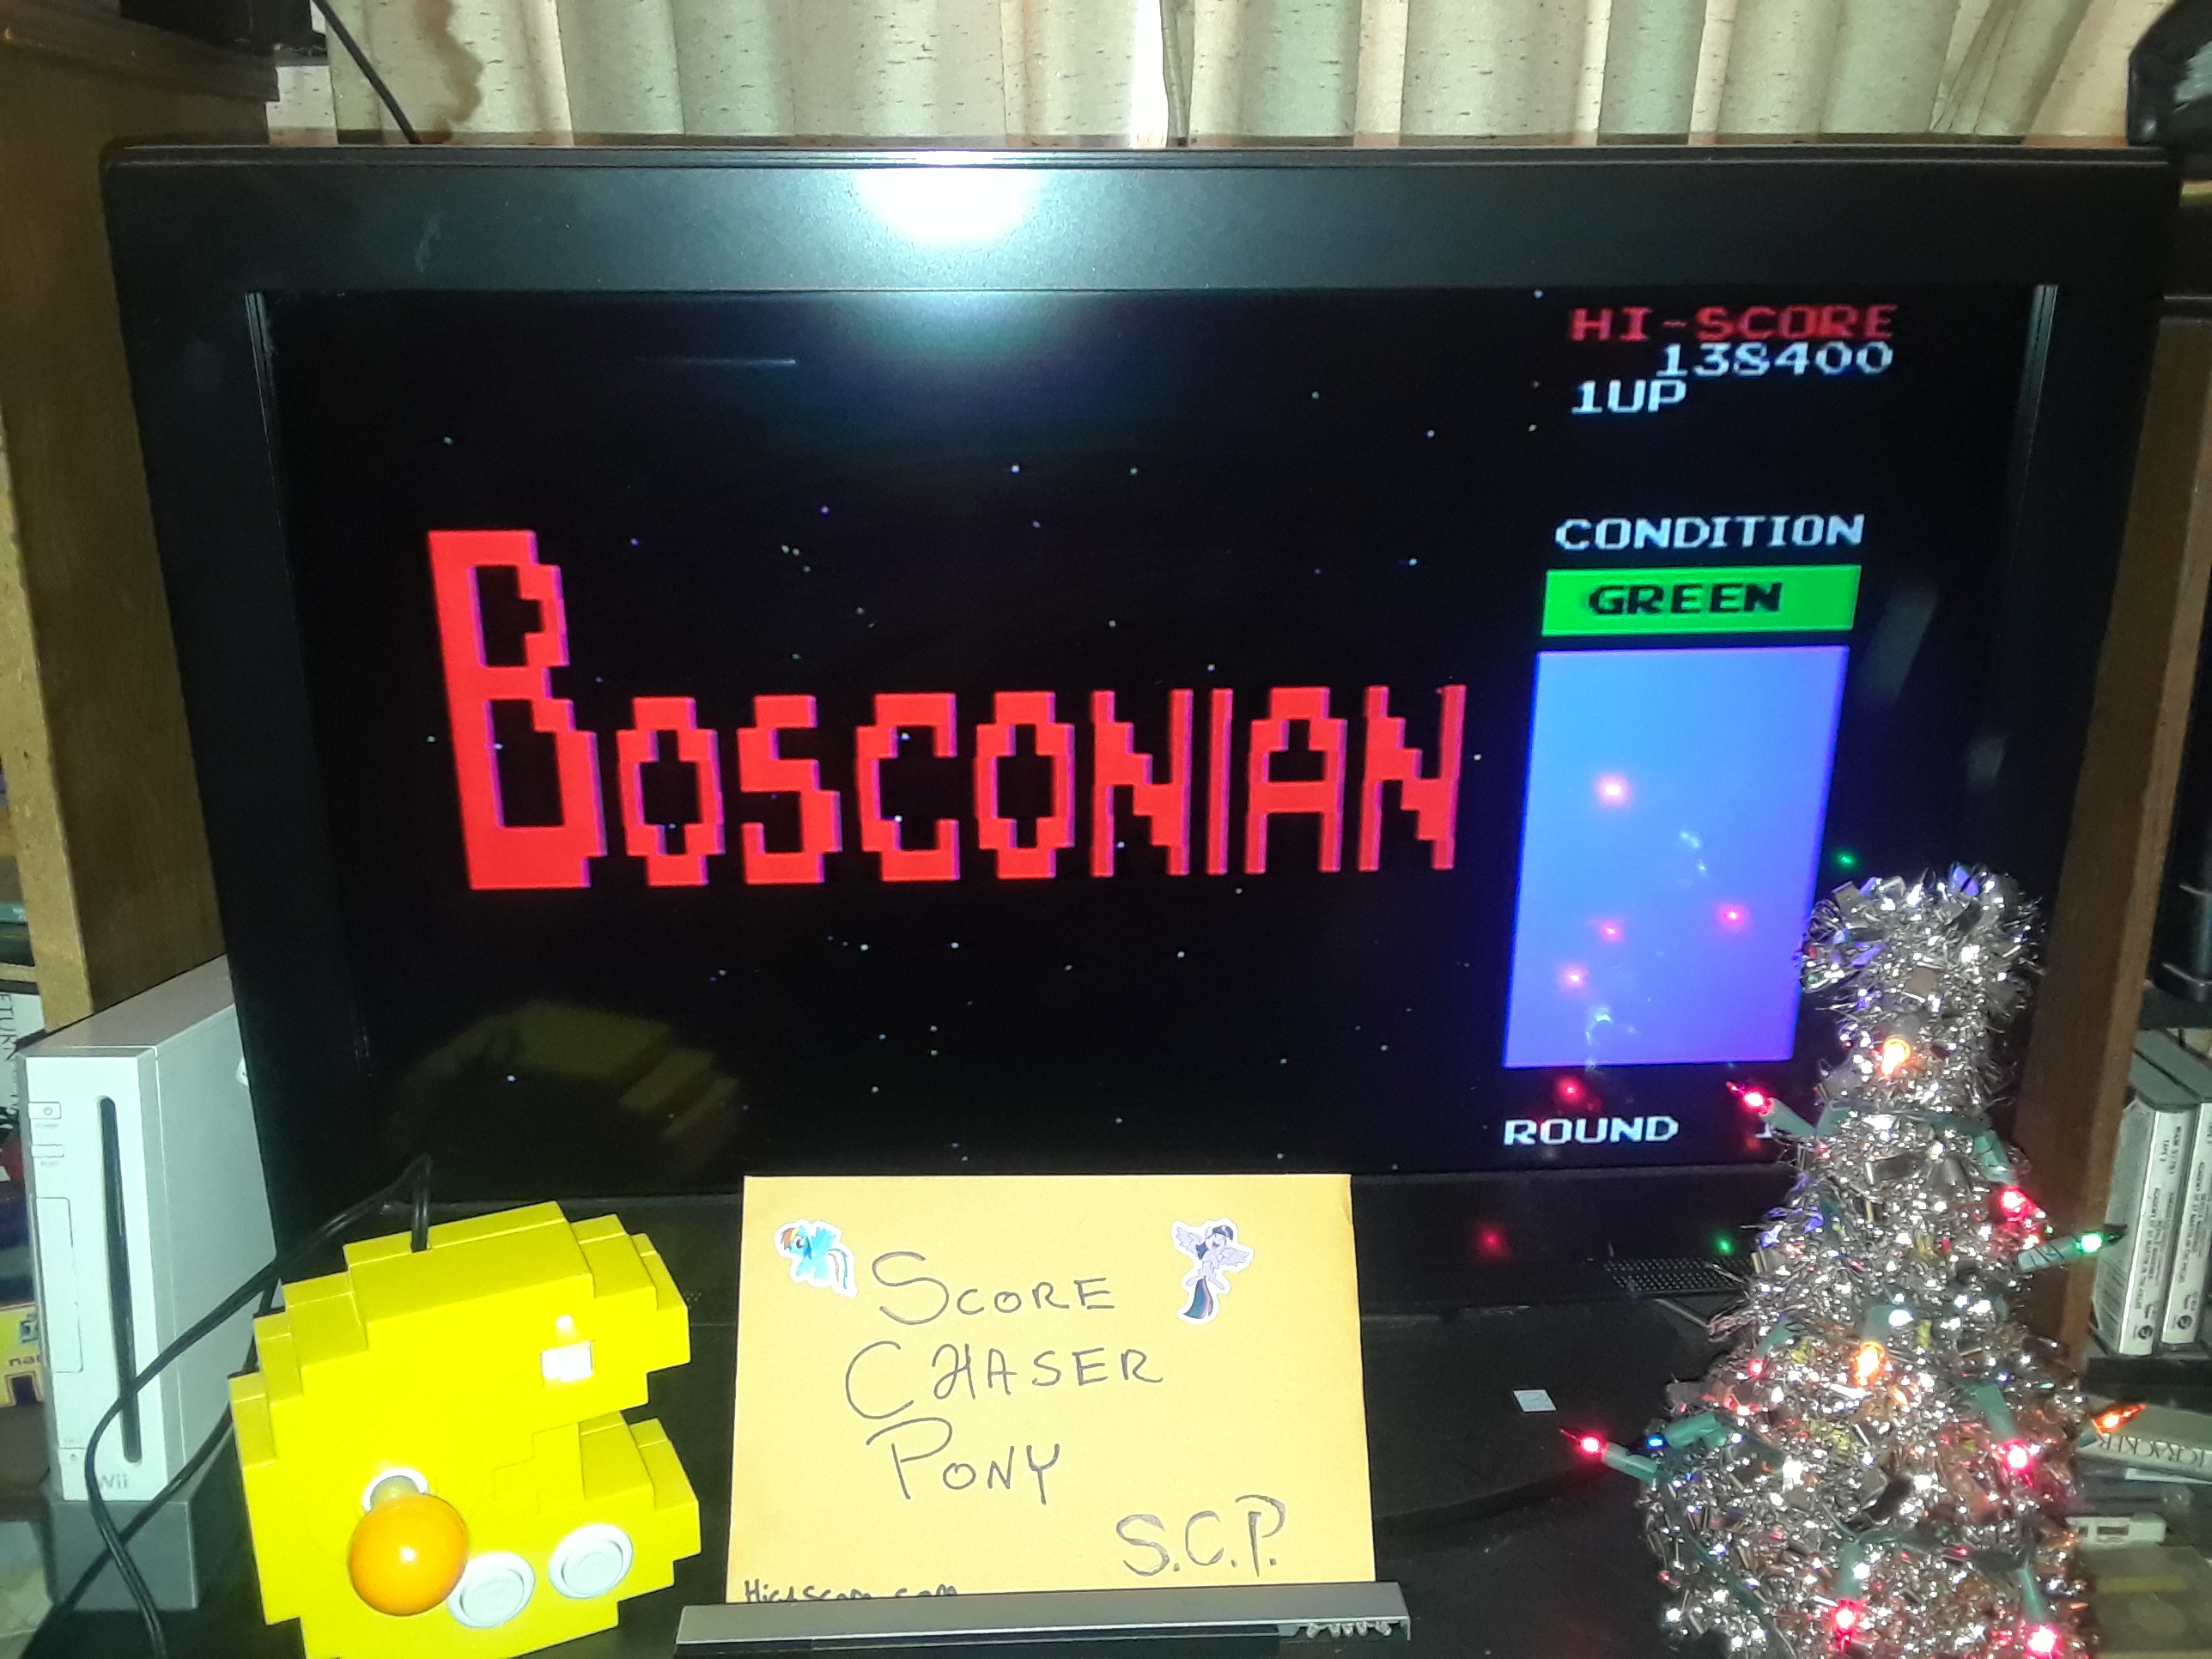 Bandai Pac-Man Connect & Play: Bosconian 138,400 points